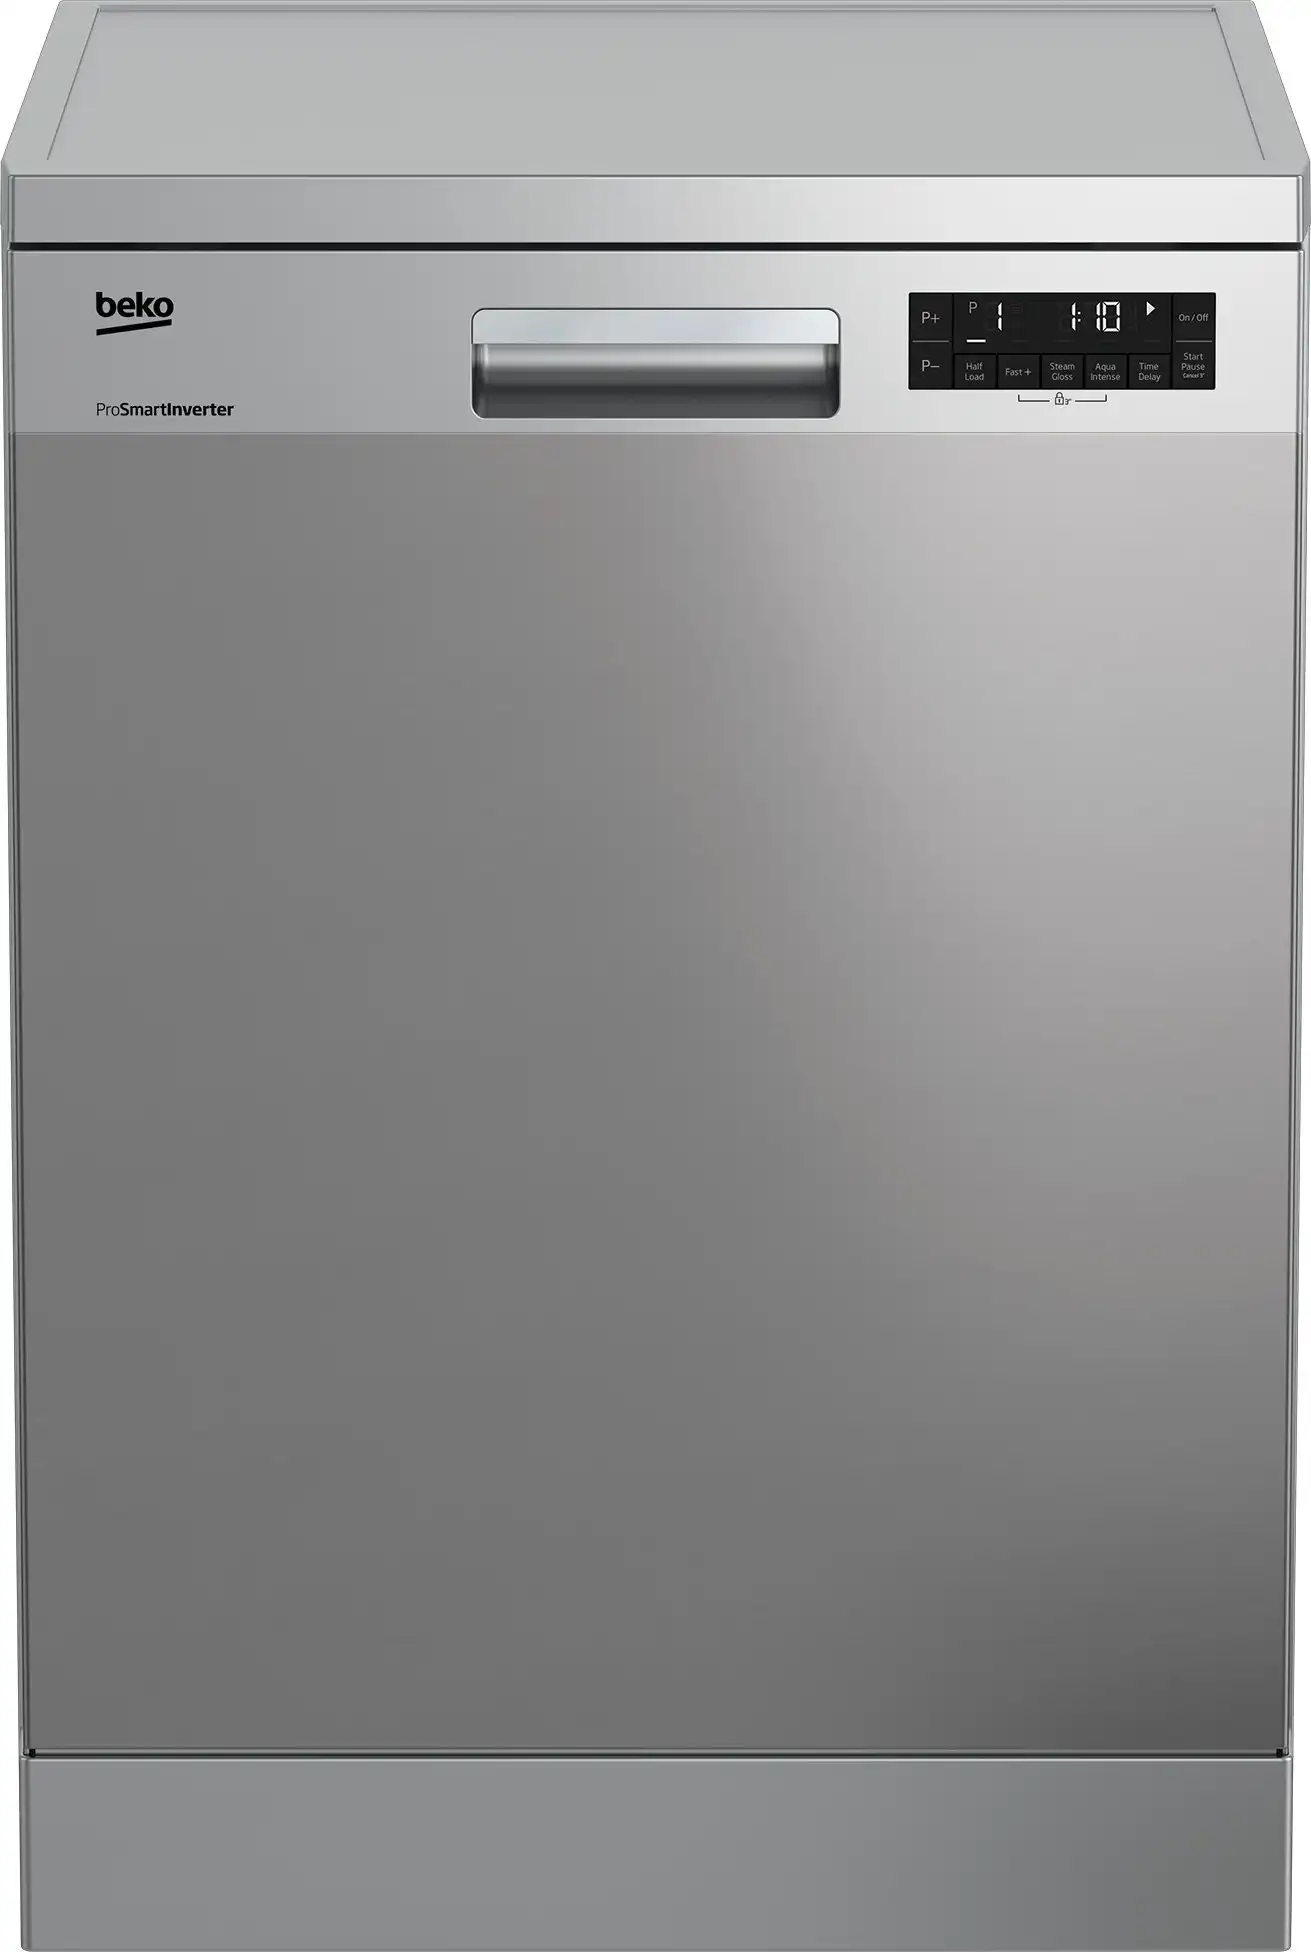 Beko 60cm Stainless Steel Freestanding Dishwasher